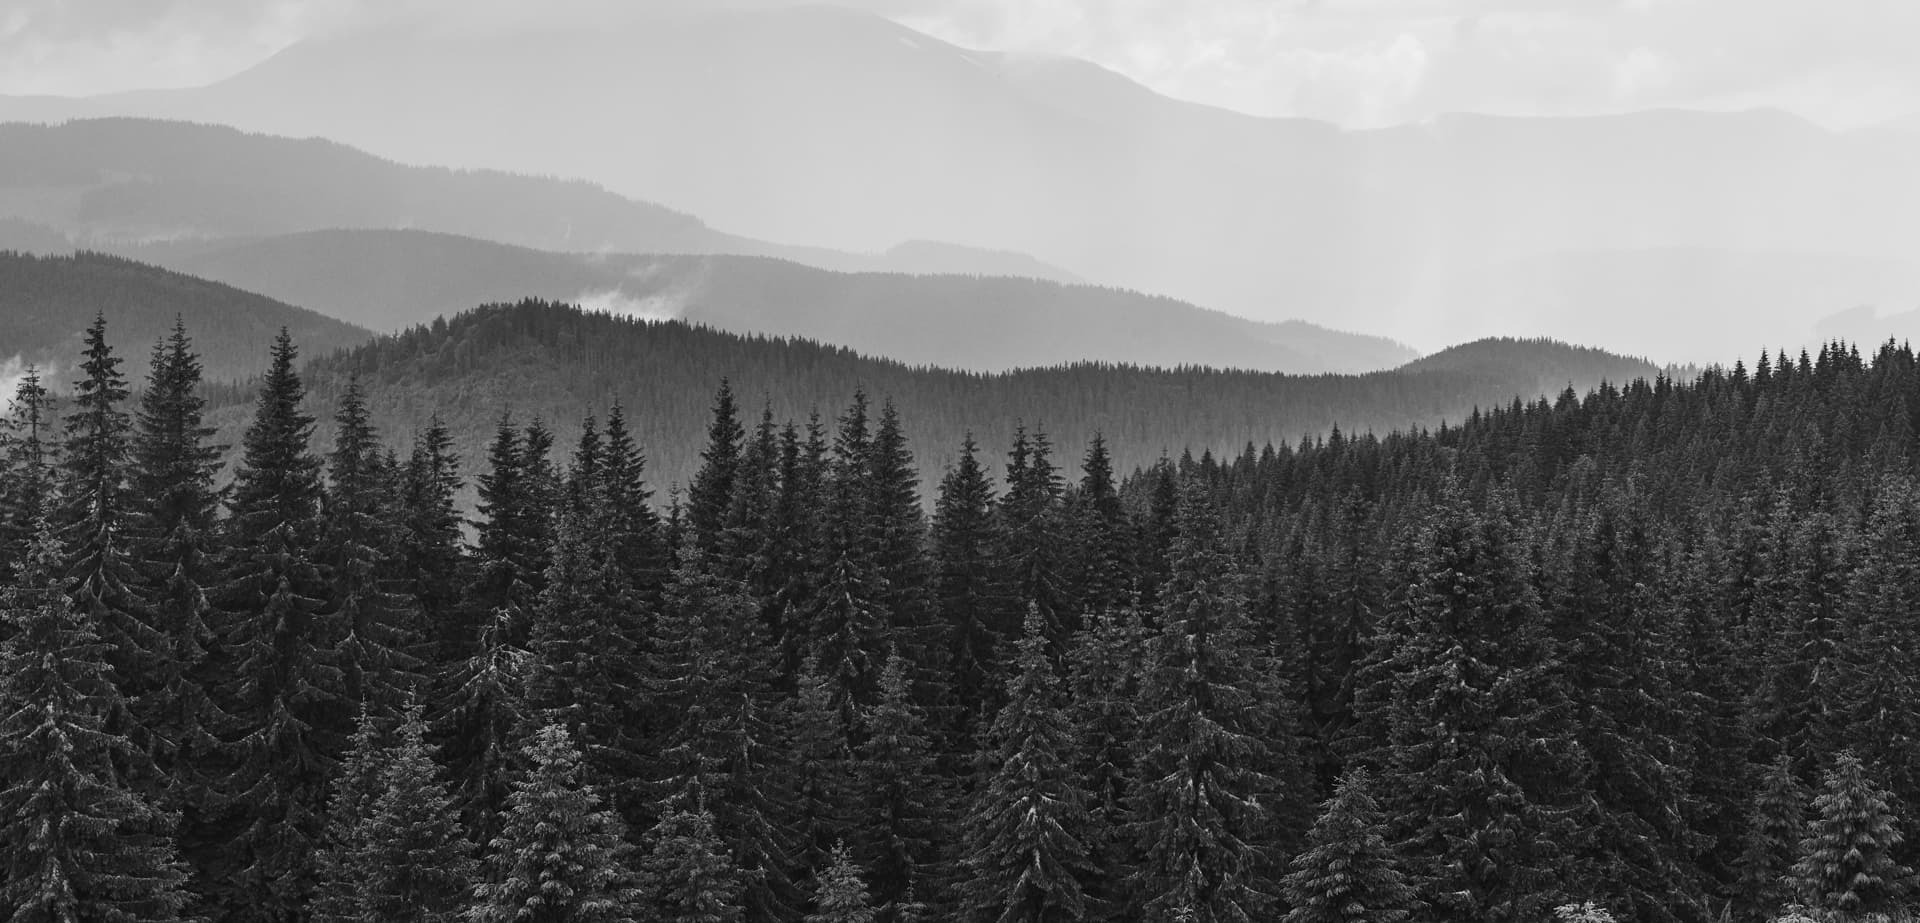 Scenic pines mountain landscape